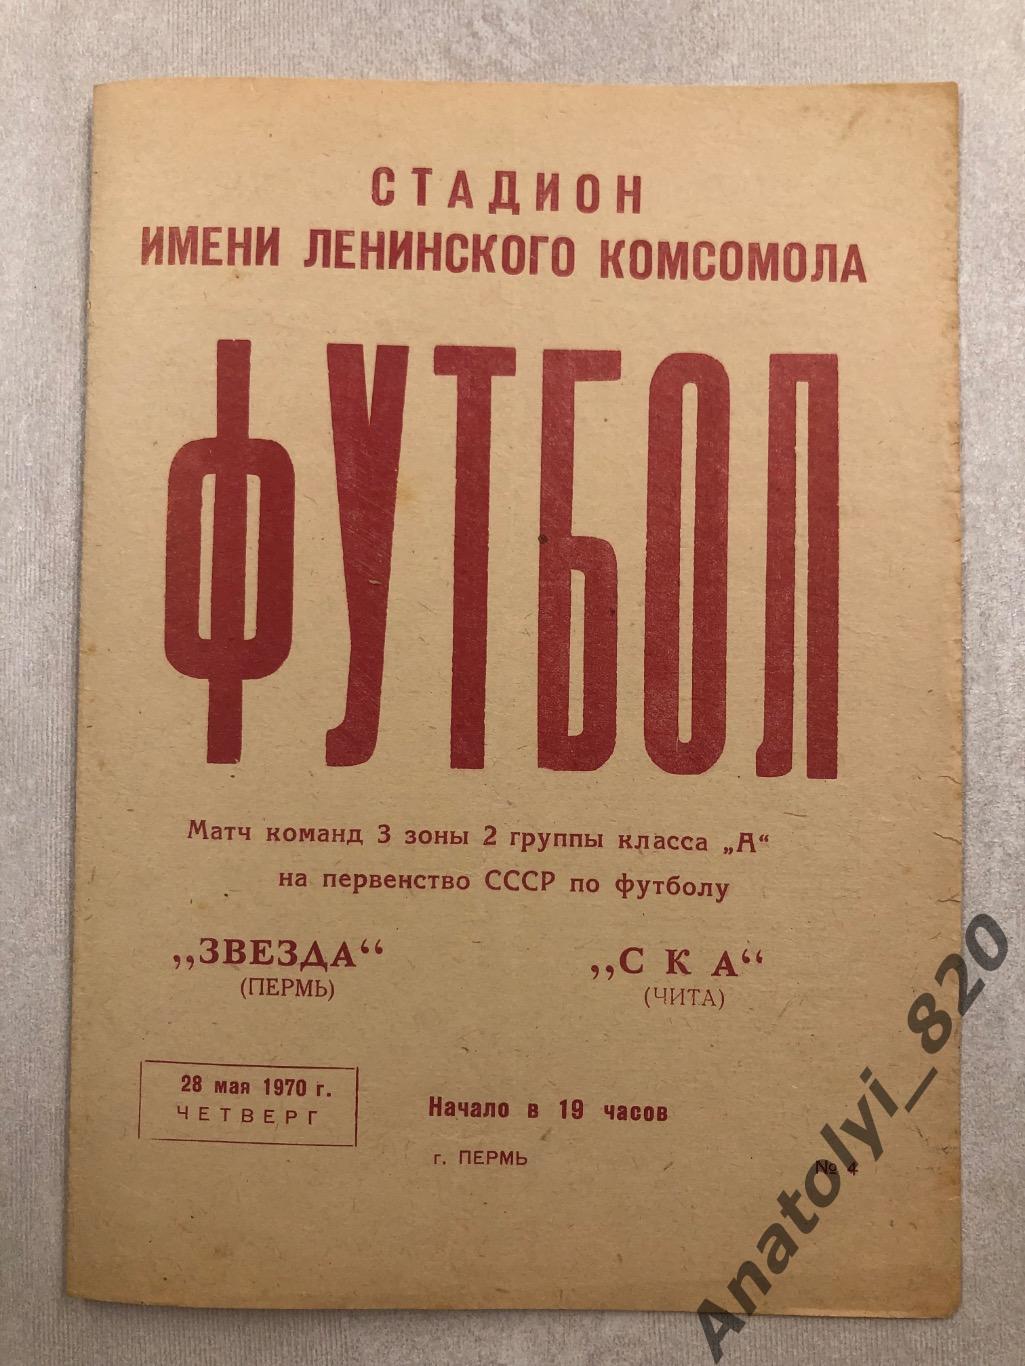 Звезда Пермь - СКА Чита 1970 год